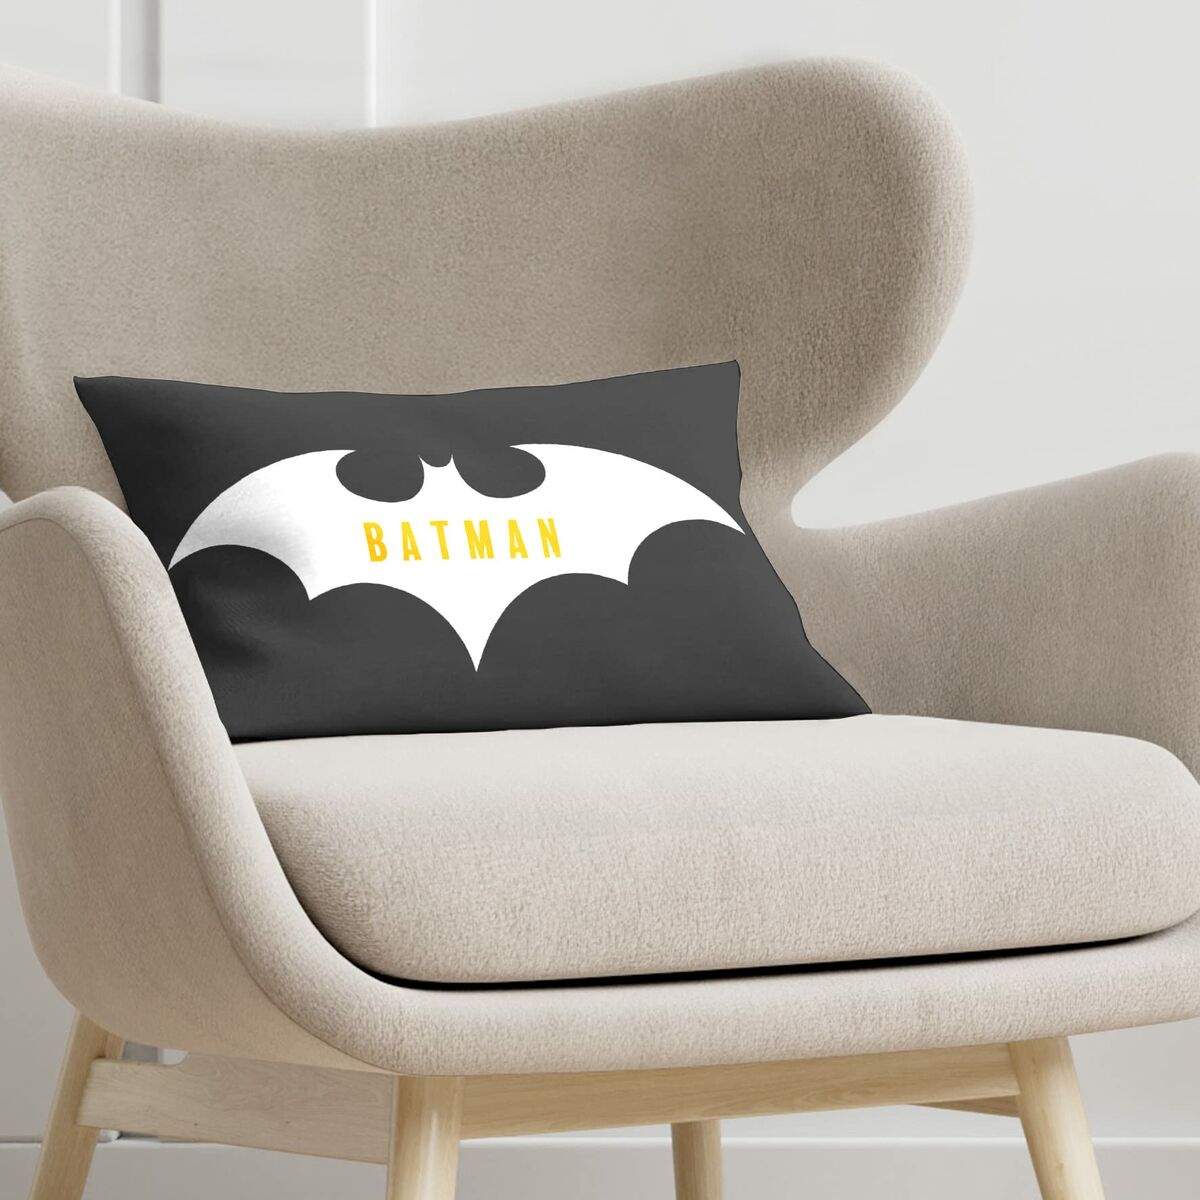 Cushion cover Batman Batman Comix 2C 30 x 50 cm